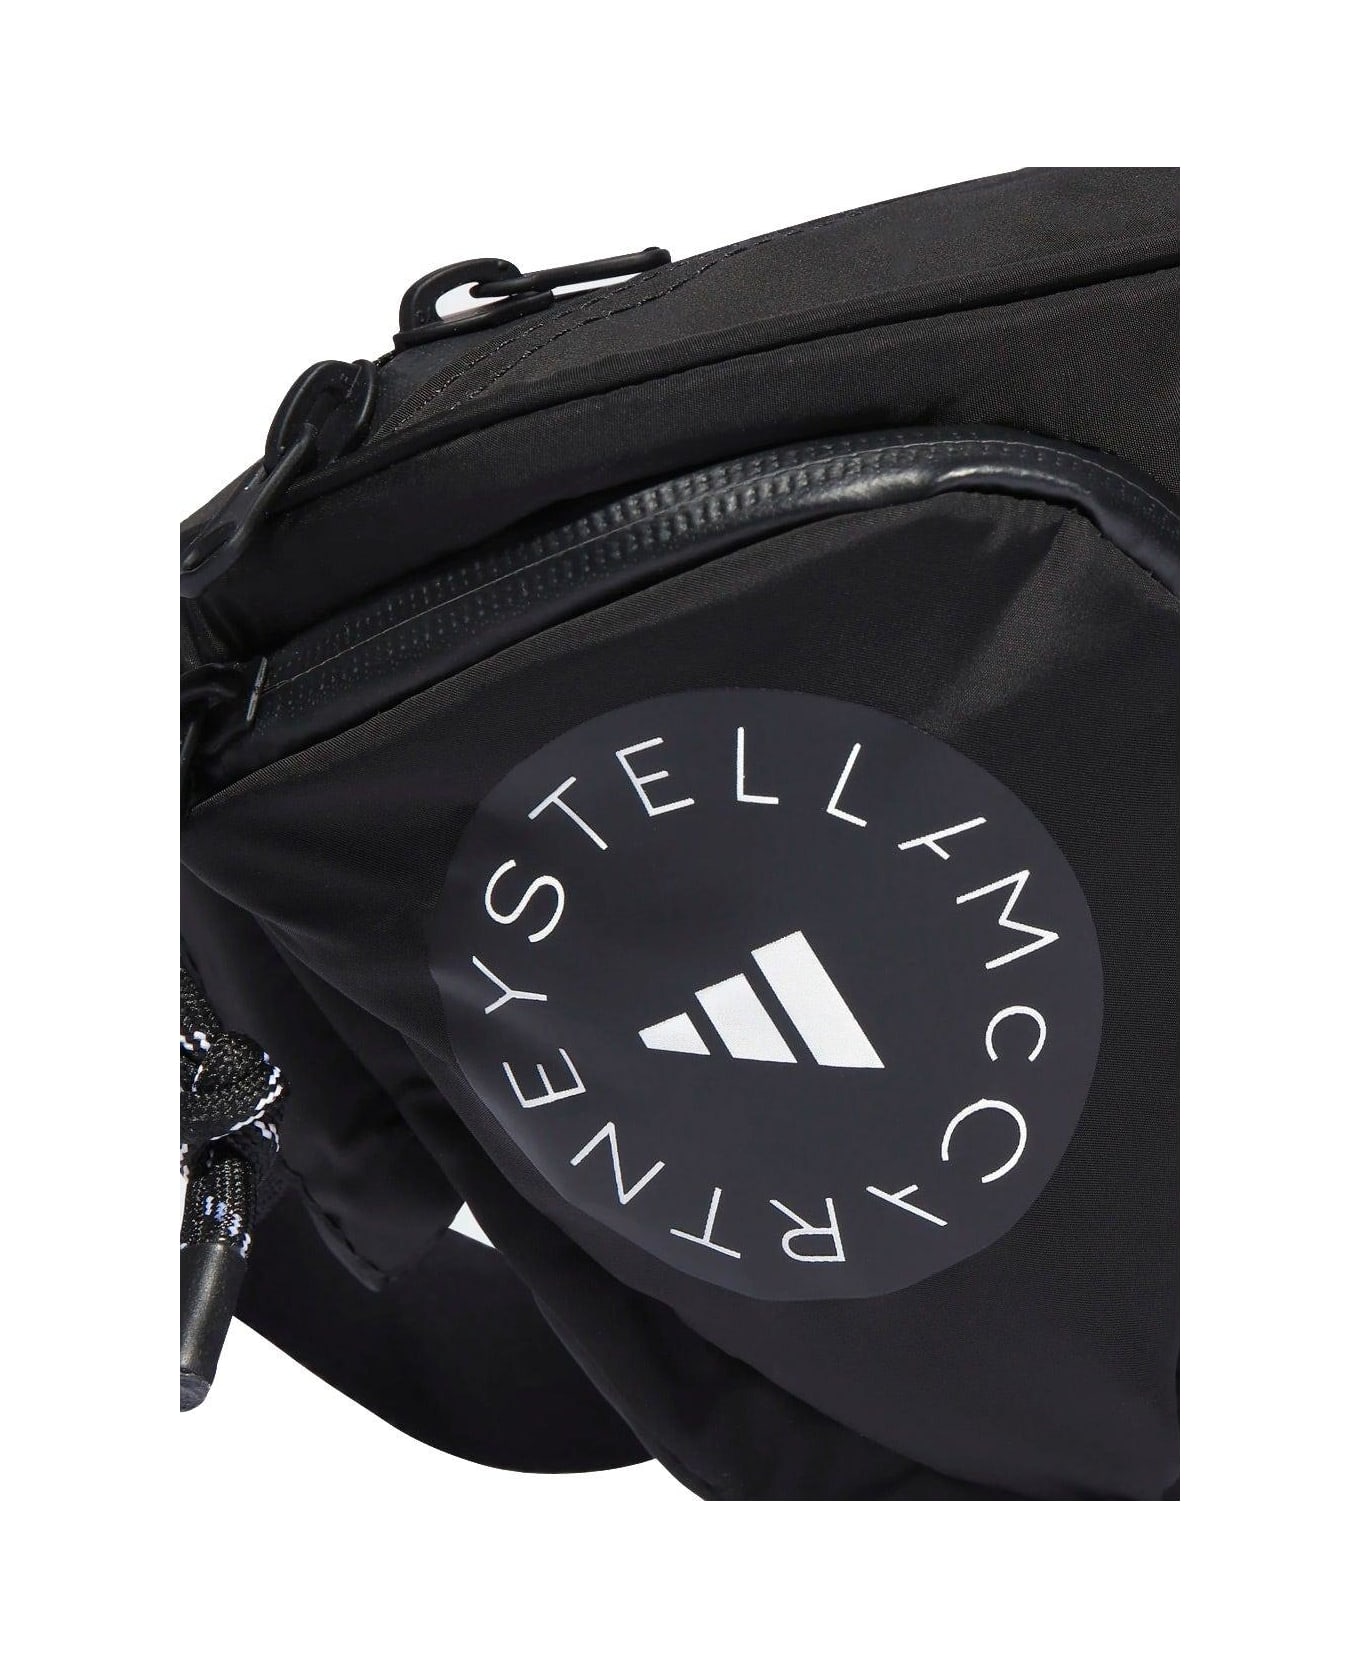 Adidas by Stella McCartney Logo Belt Bag - Black/white/black ベルトバッグ